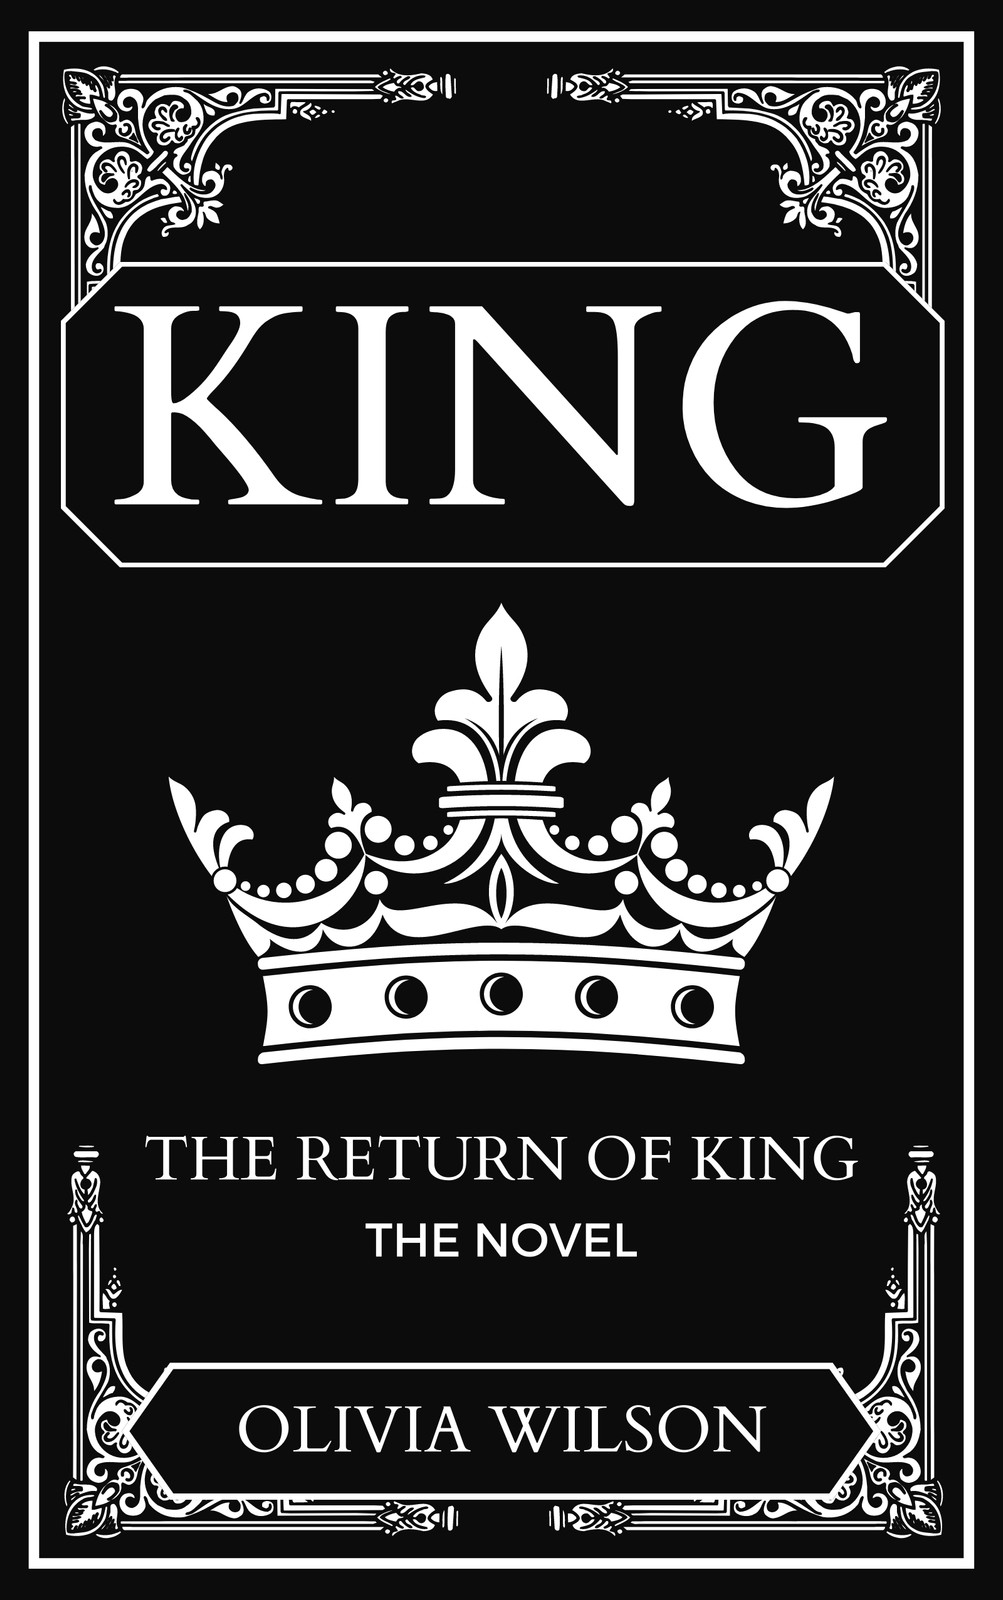 Black and White Vintage King Story Novel Book Cover